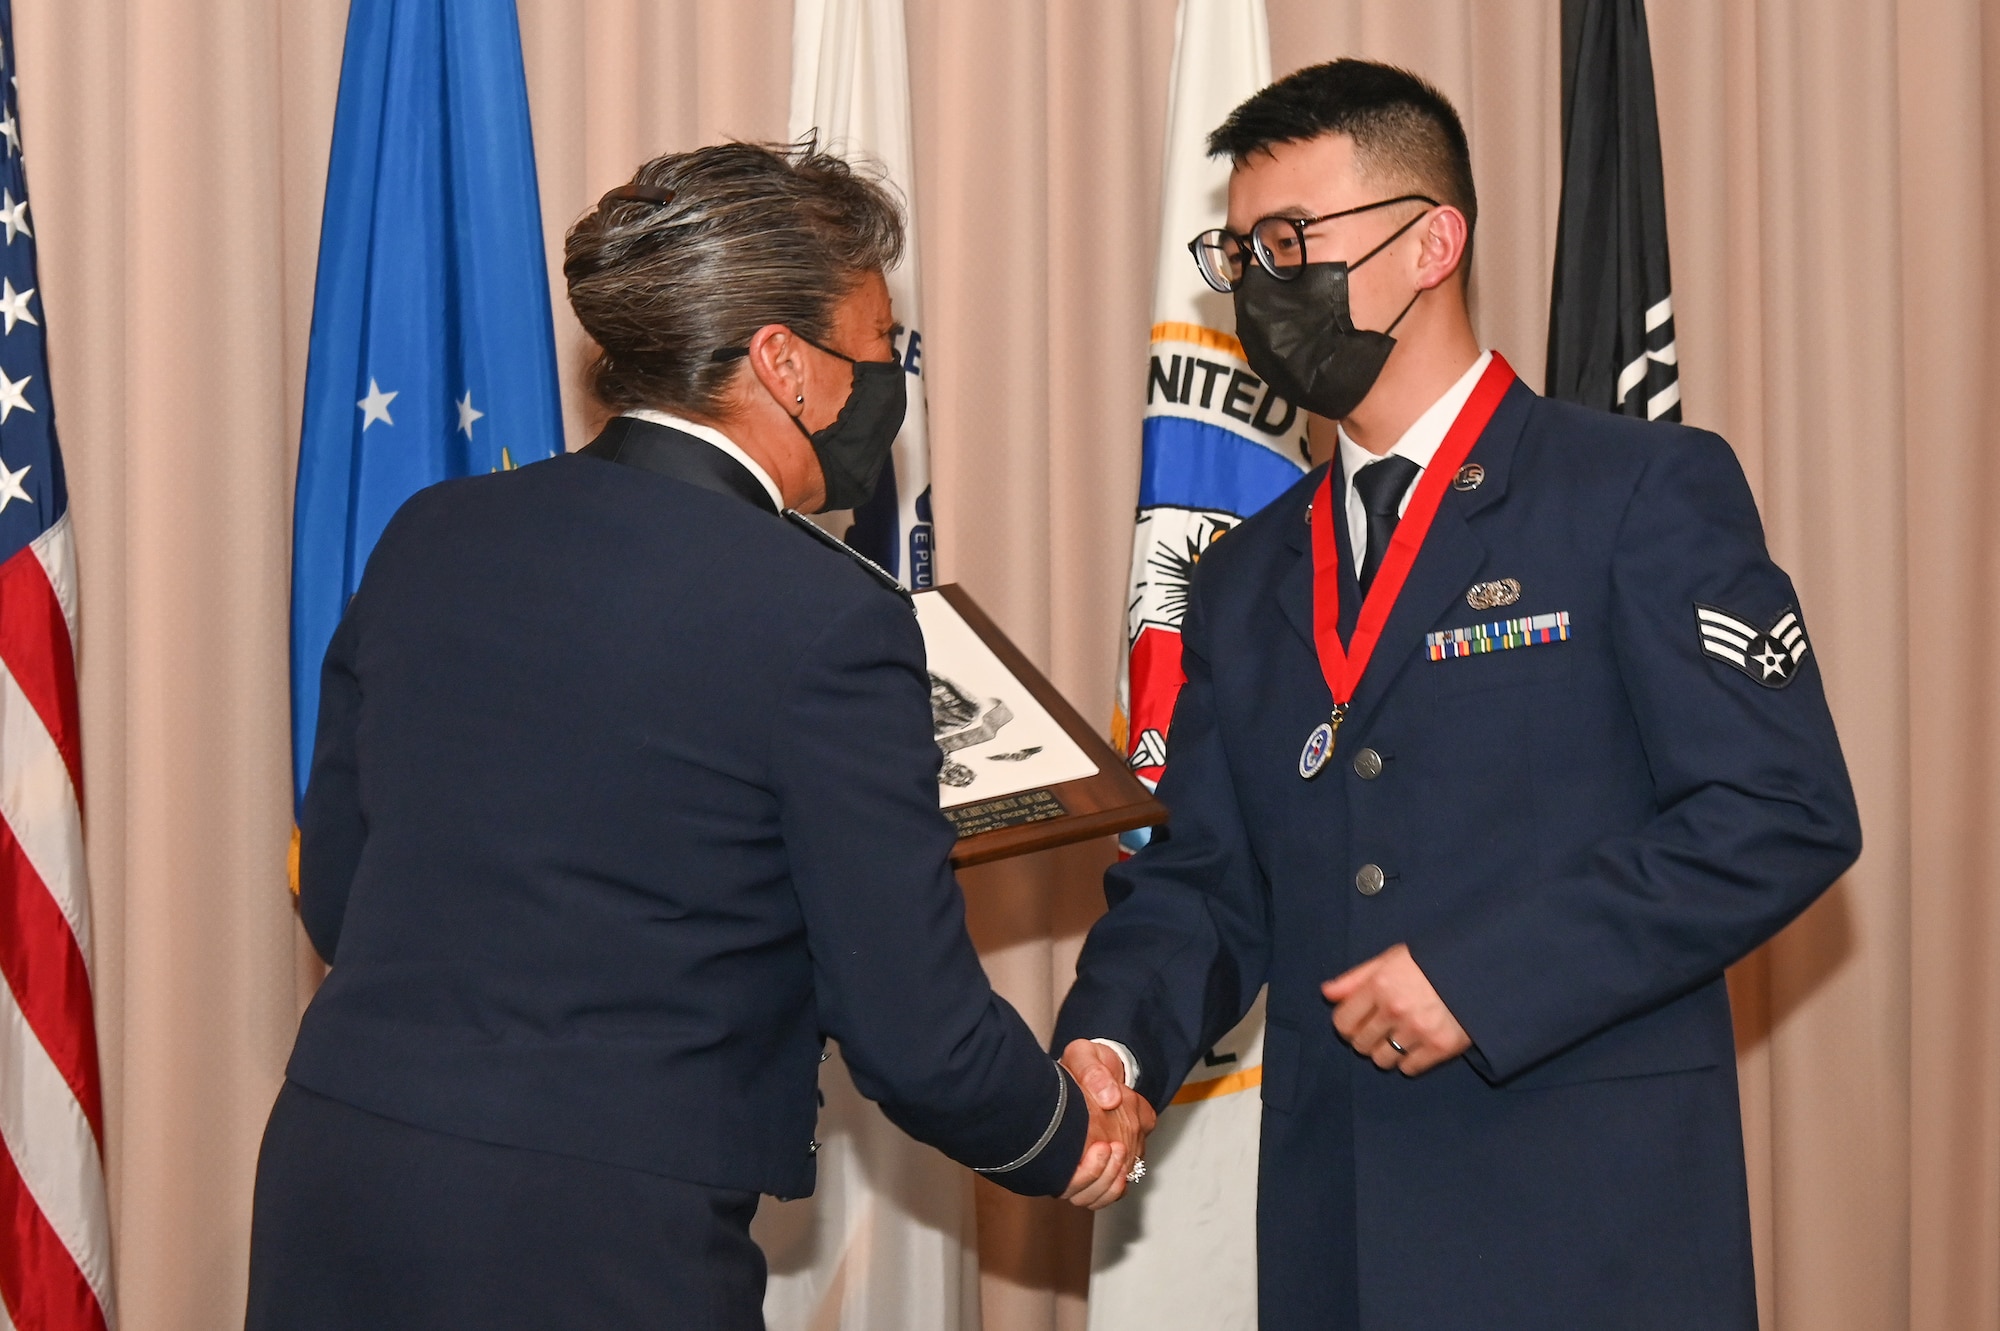 Installation commander congratulates Airman